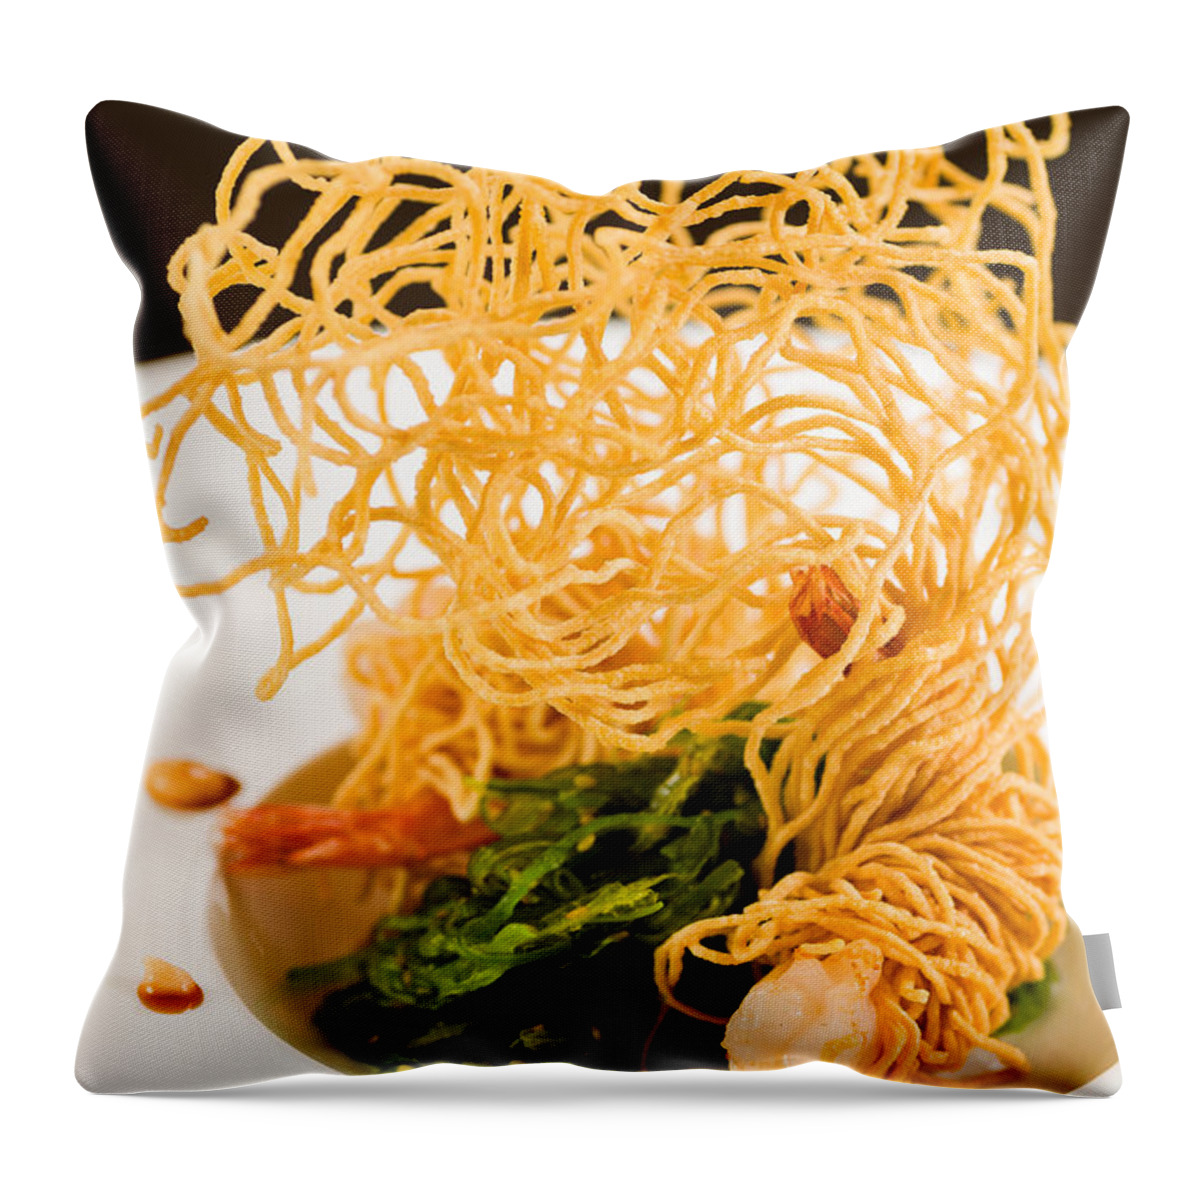 Asian Throw Pillow featuring the photograph Shrimp Tempura by Raul Rodriguez